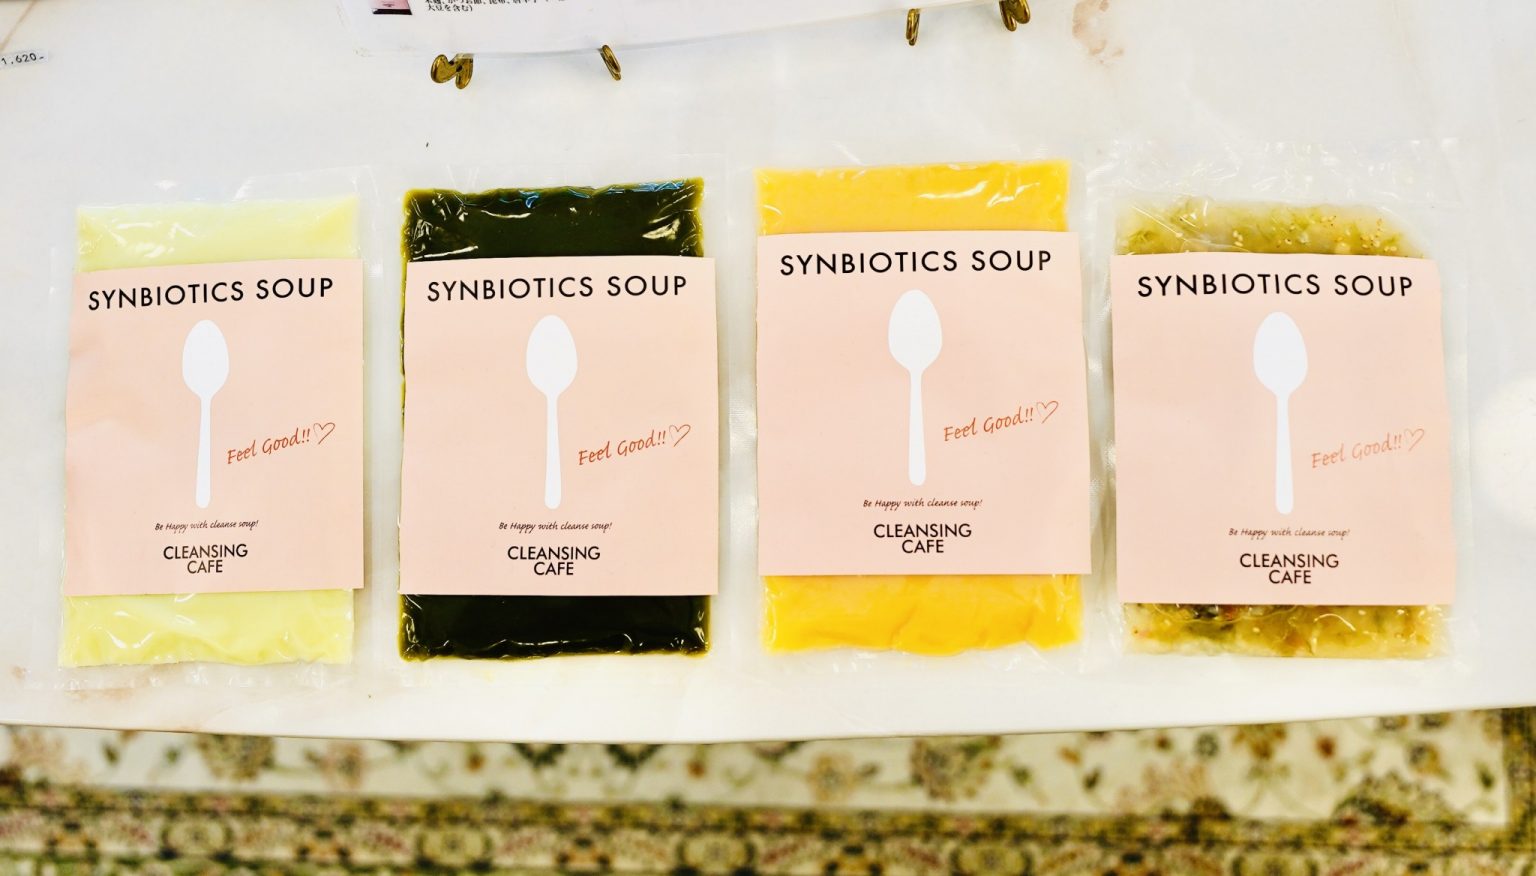 「SYNBIOTICS SOUP-シンバイオティクススープ-」1,180円（税込）／200g。「白ごまと生姜風味のホワイトスキンスープ」「トマトとミルクの濃厚ビューティースープ」など5種類。